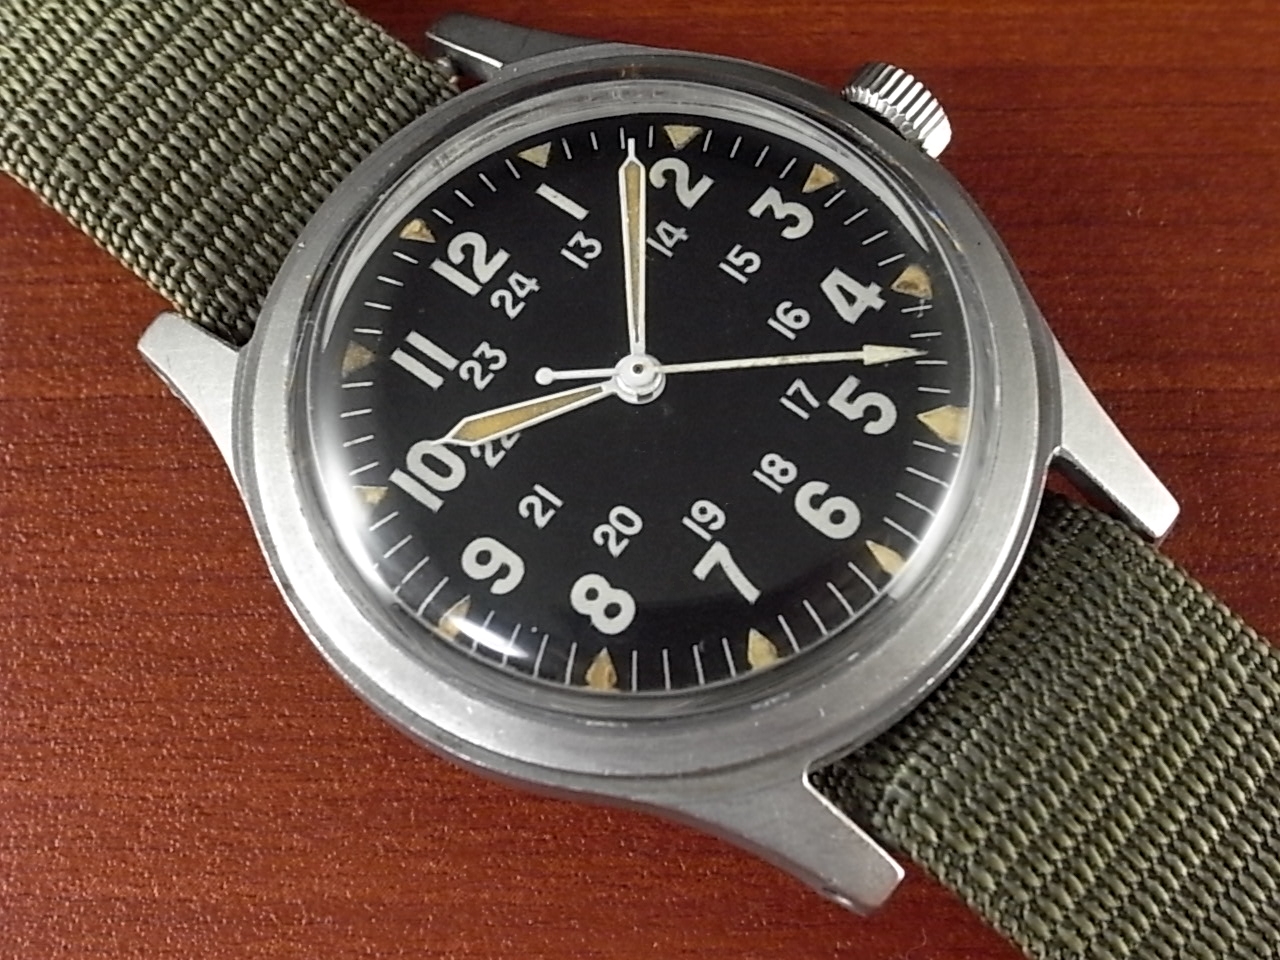 HAMILTON ハミルトン ベトナム戦争 ジャンク 腕時計